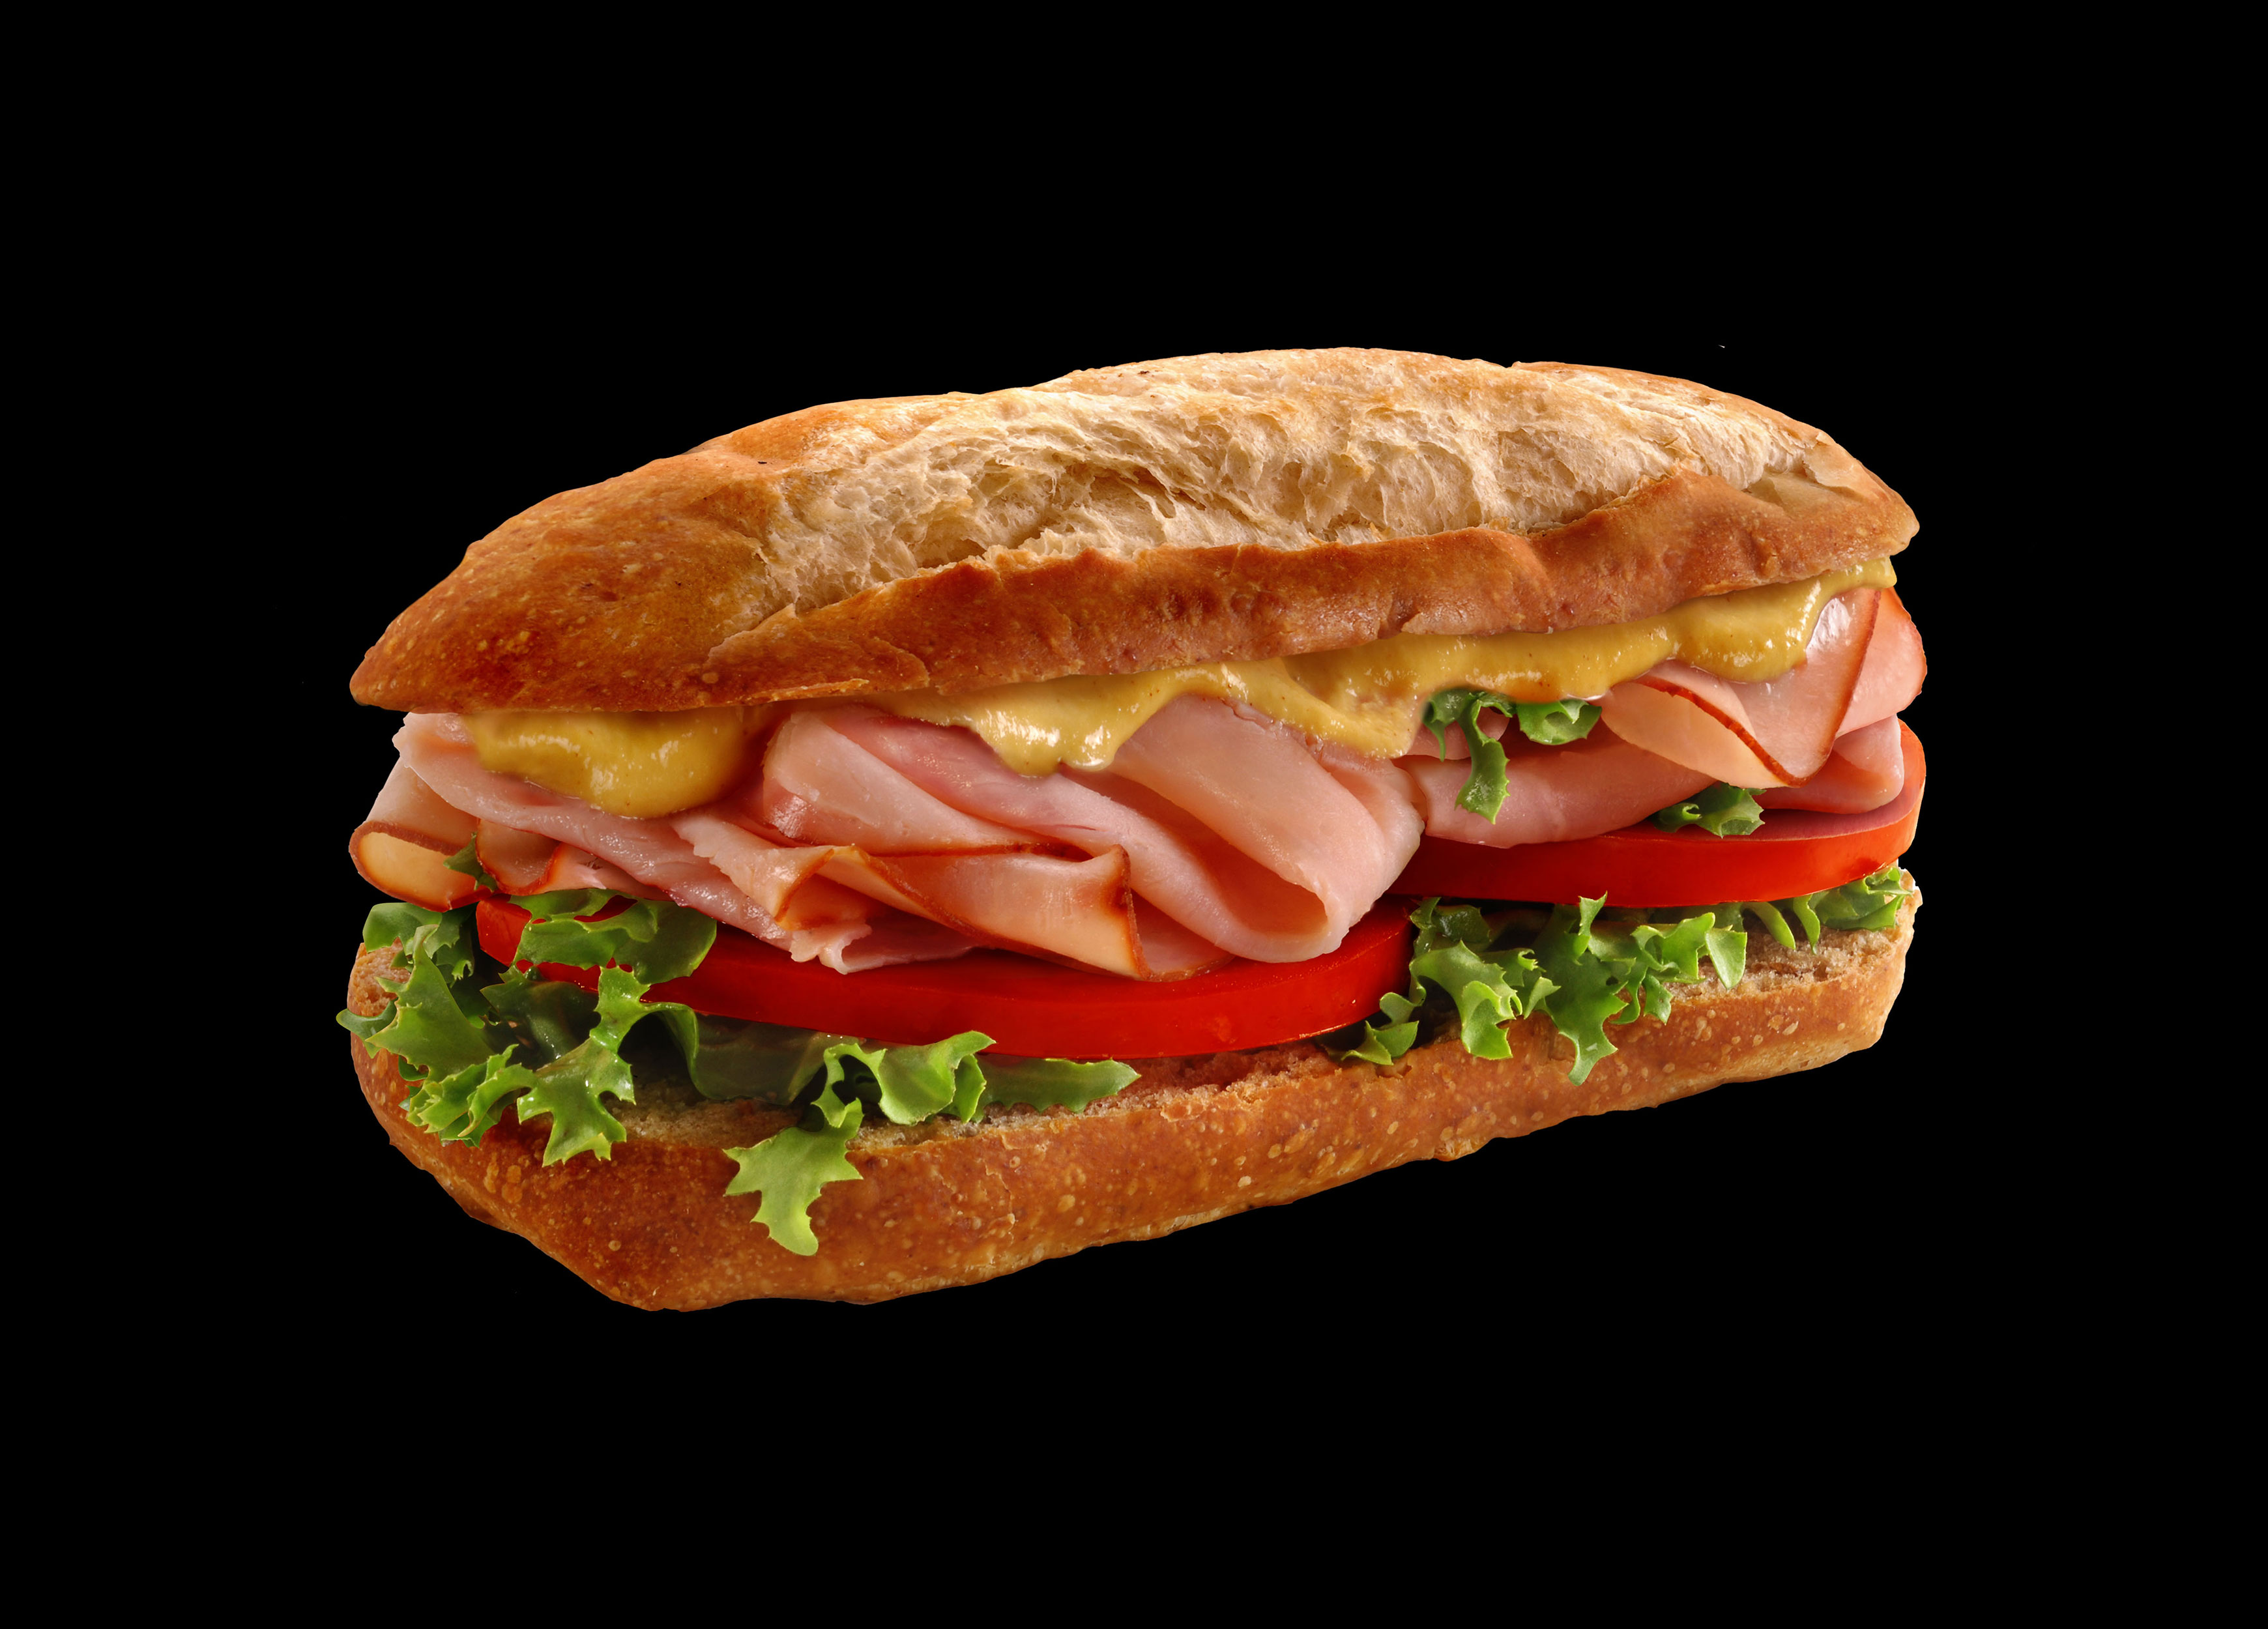 mike wepplo photoreal photography sandwich hoggie tomato mustard